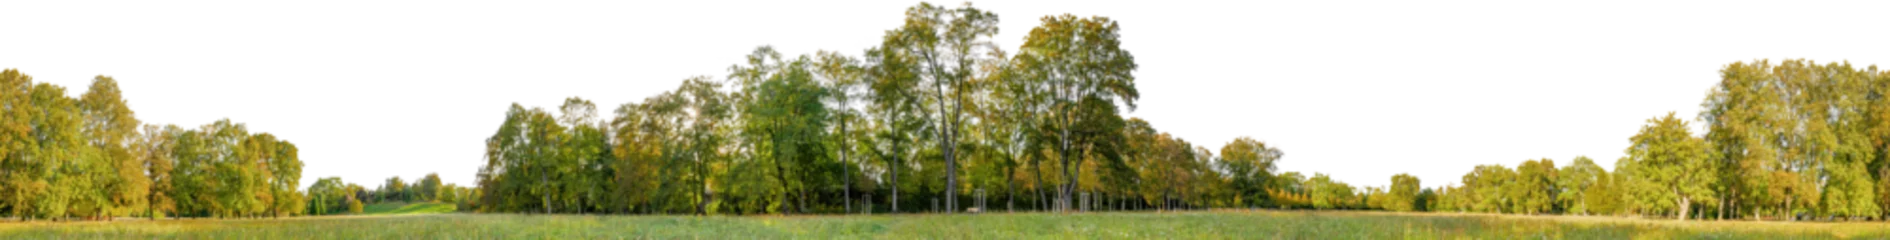 Dekokissen tree line trees autumn xl horizontal seamless arch viz cutout © Mathias Weil